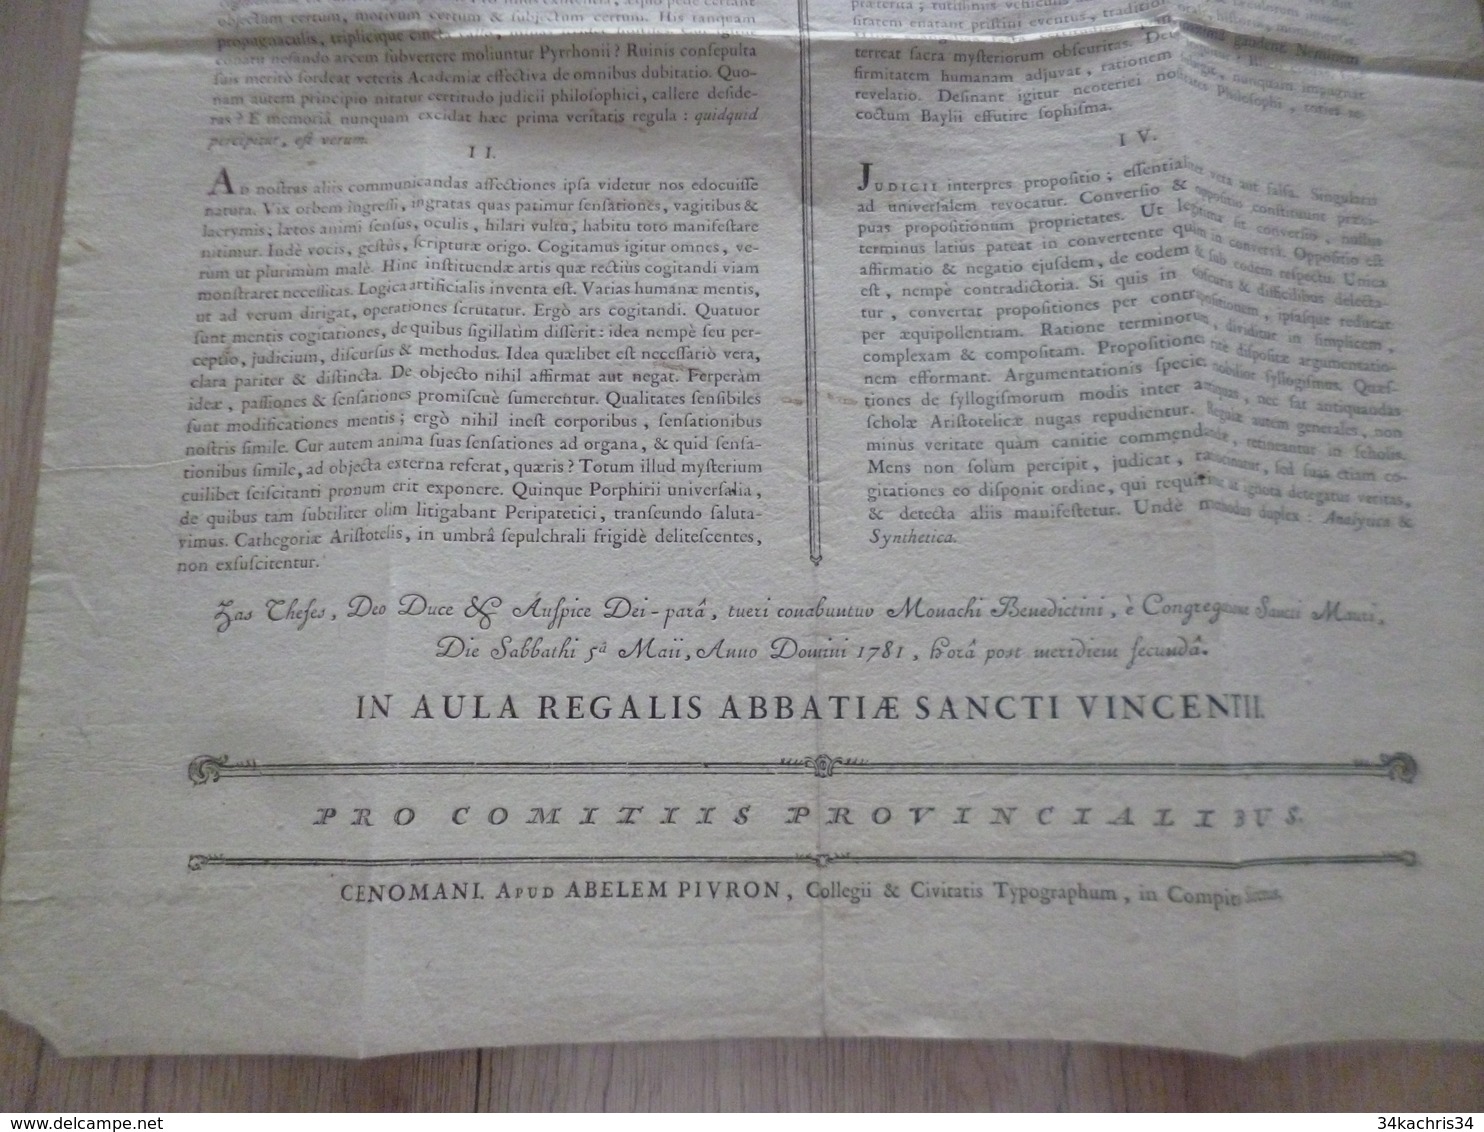 Affiche Placcard 1781 En Latin 40 X 50 Deo Optimo Maximo Conclusiones Philosophivae Vignette Licorne Philosophie? - Afiches